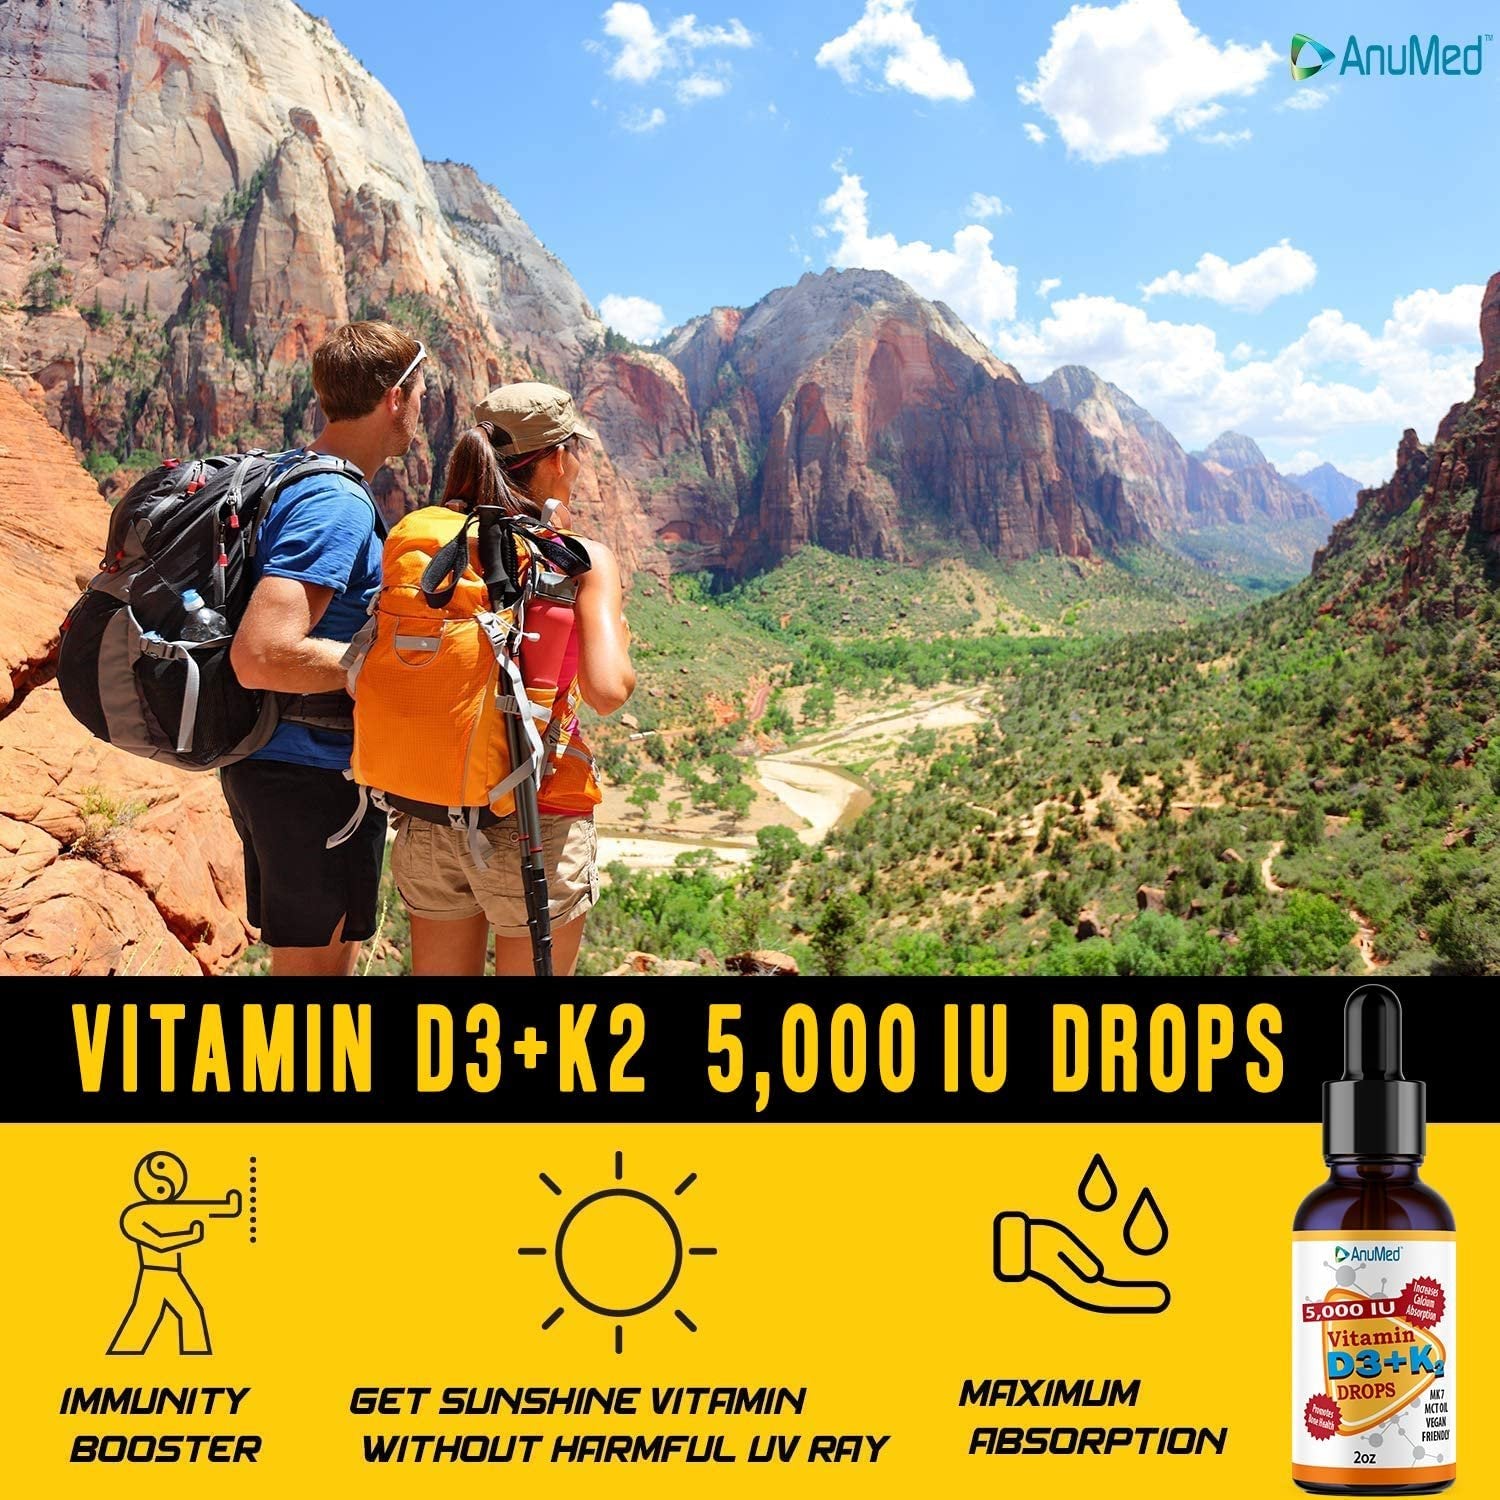 Anumed International Vitamin D3+K2 Liquid Drops- 5,000 IU Increase Calcium Absorption - Promotes Bone Health - 2oz